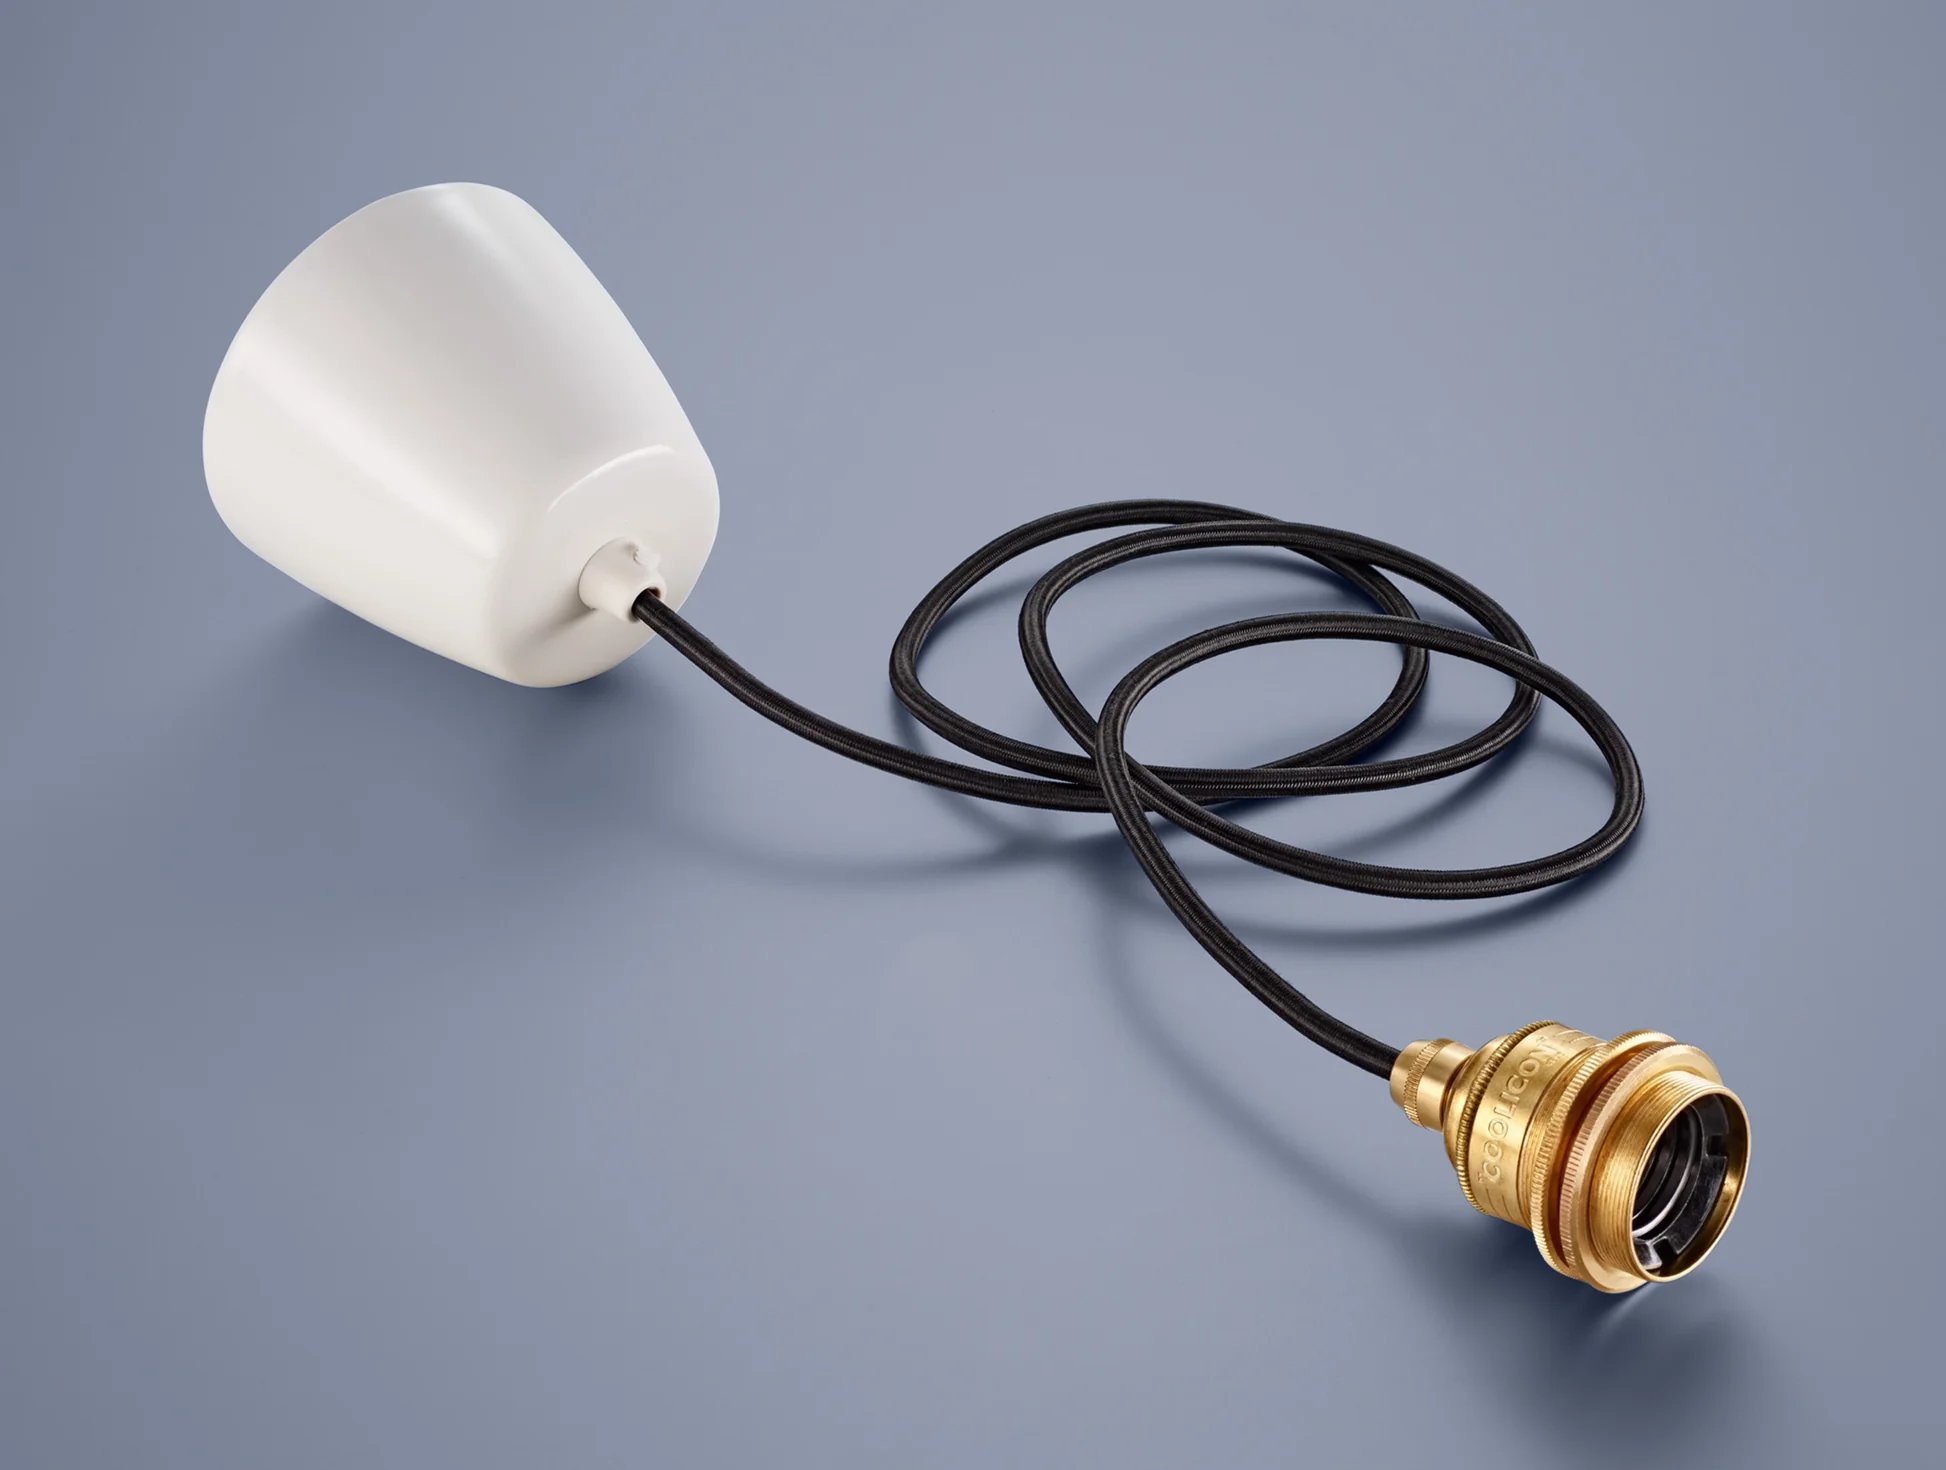 How To Shorten A Lamp Cord